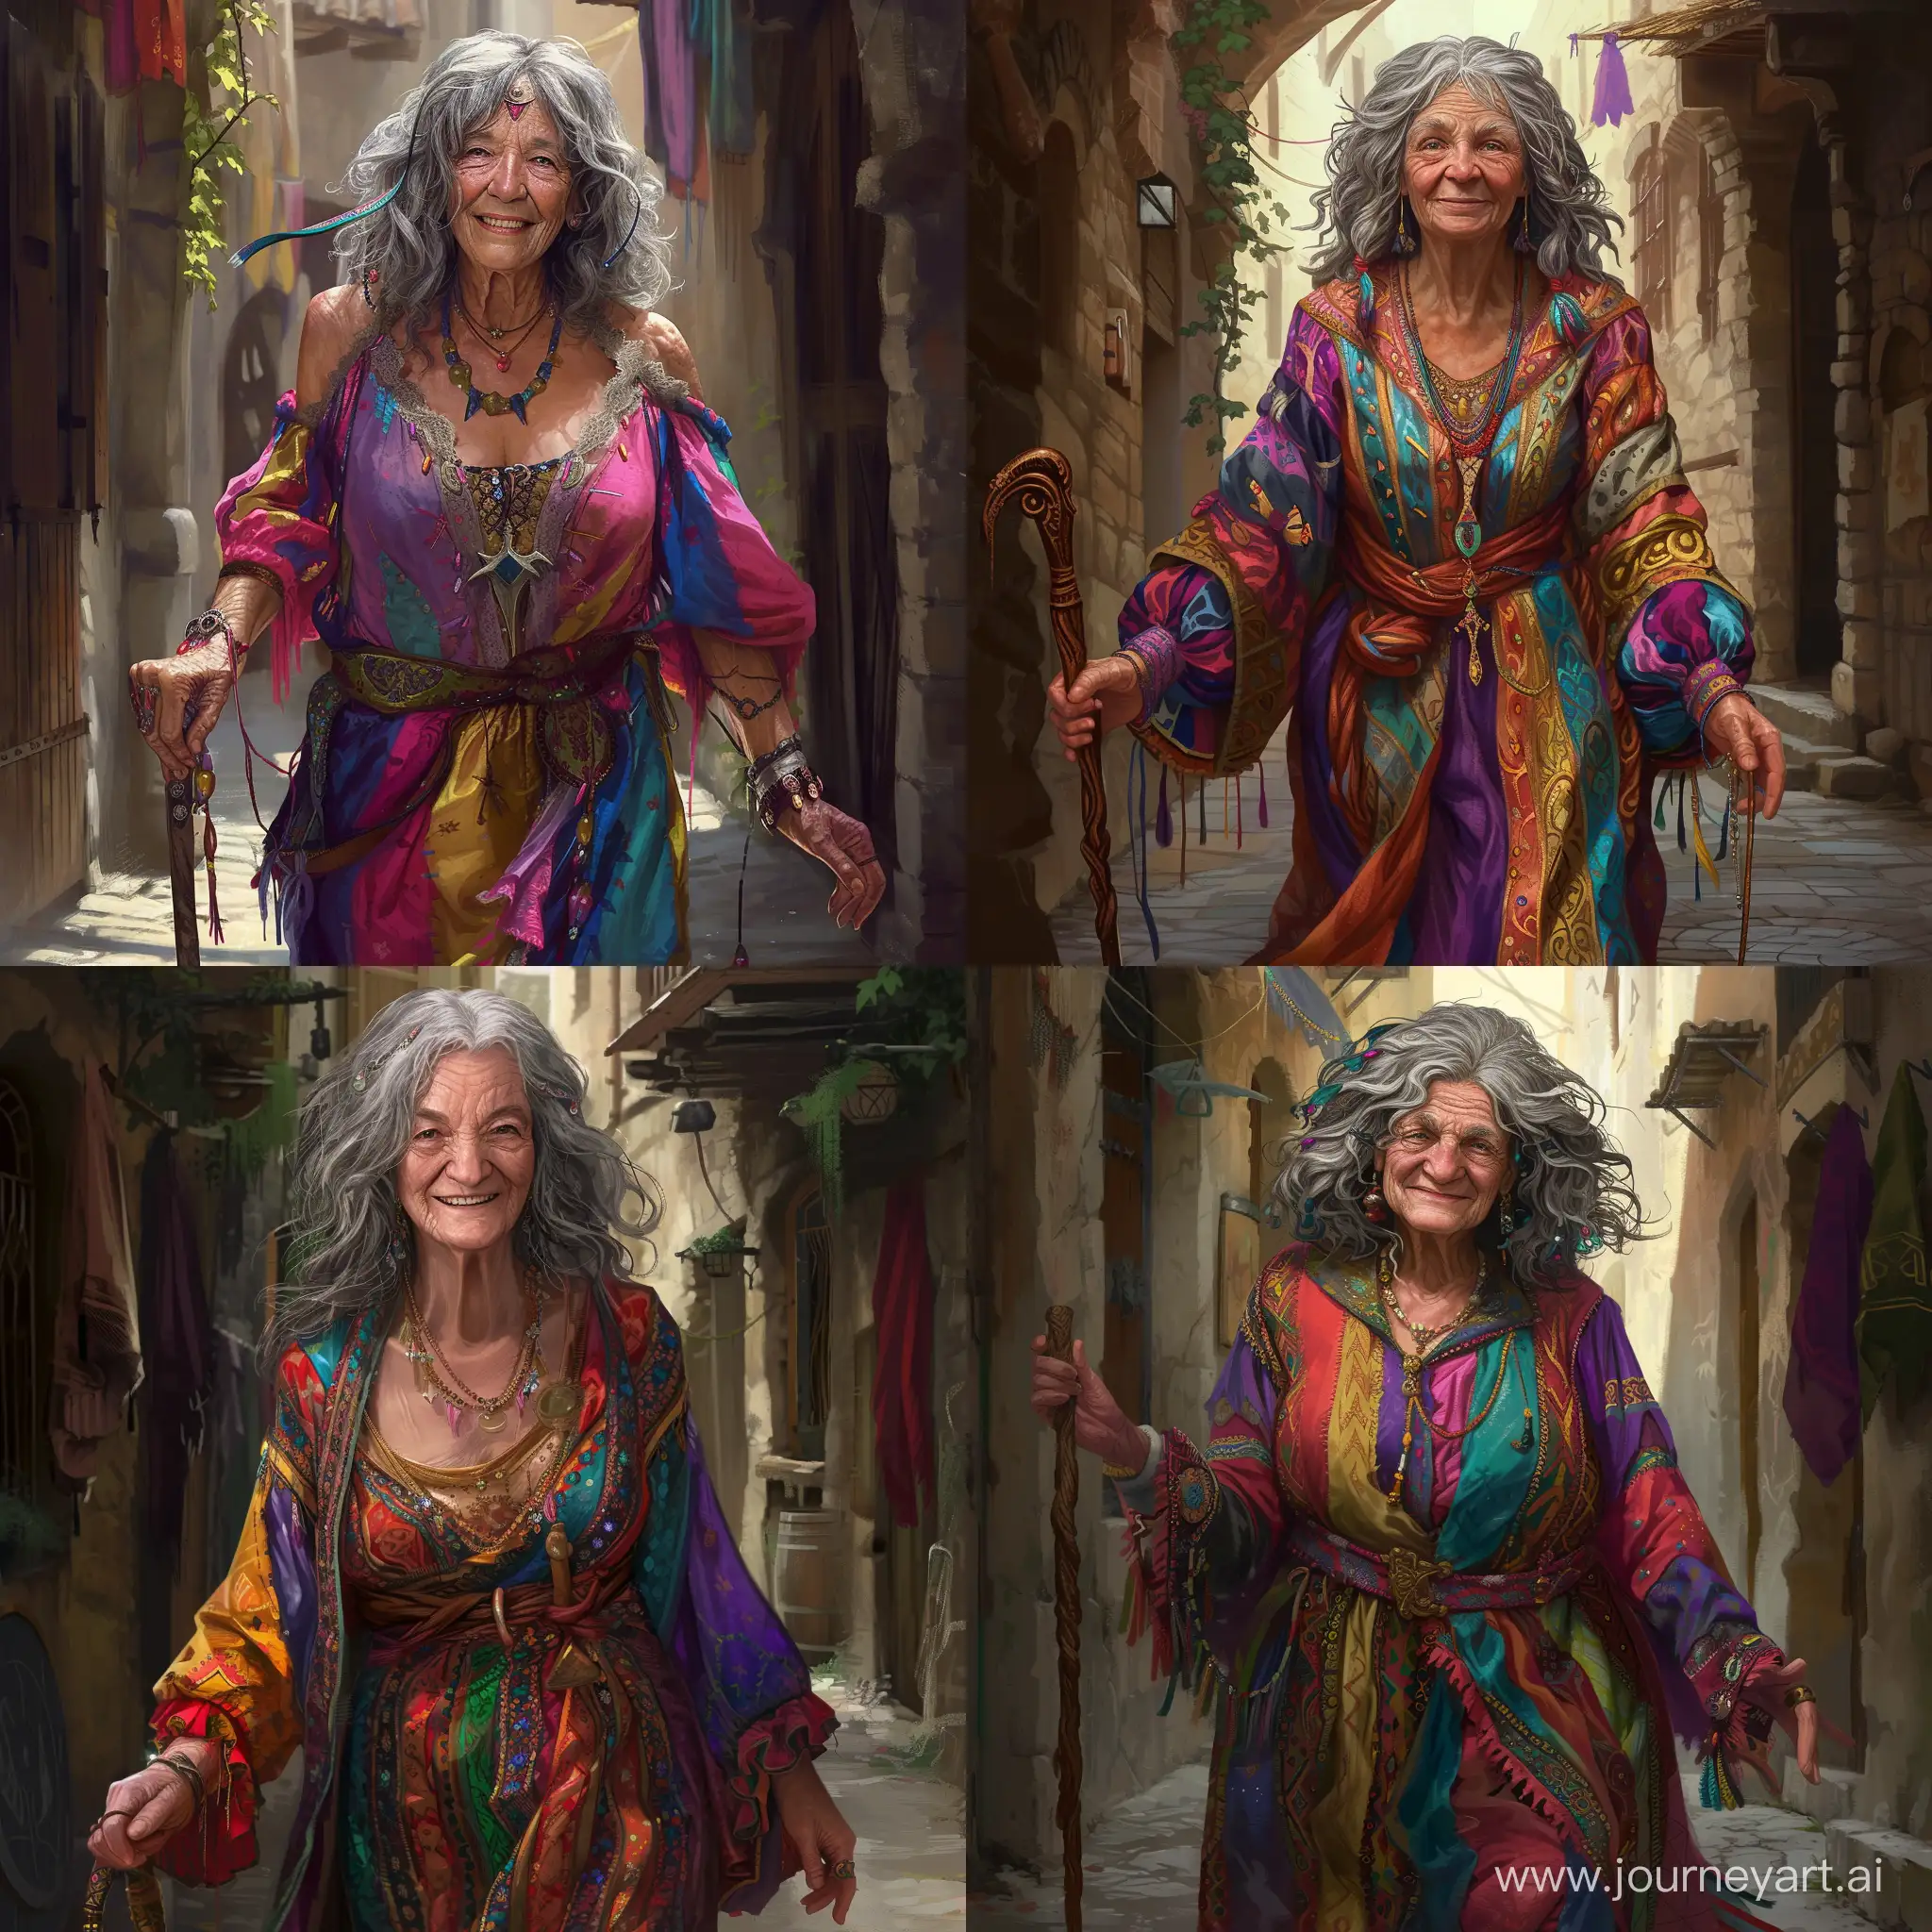 Joyful-Senior-Gypsy-Woman-with-Wisdom-Exploring-an-Alleyway